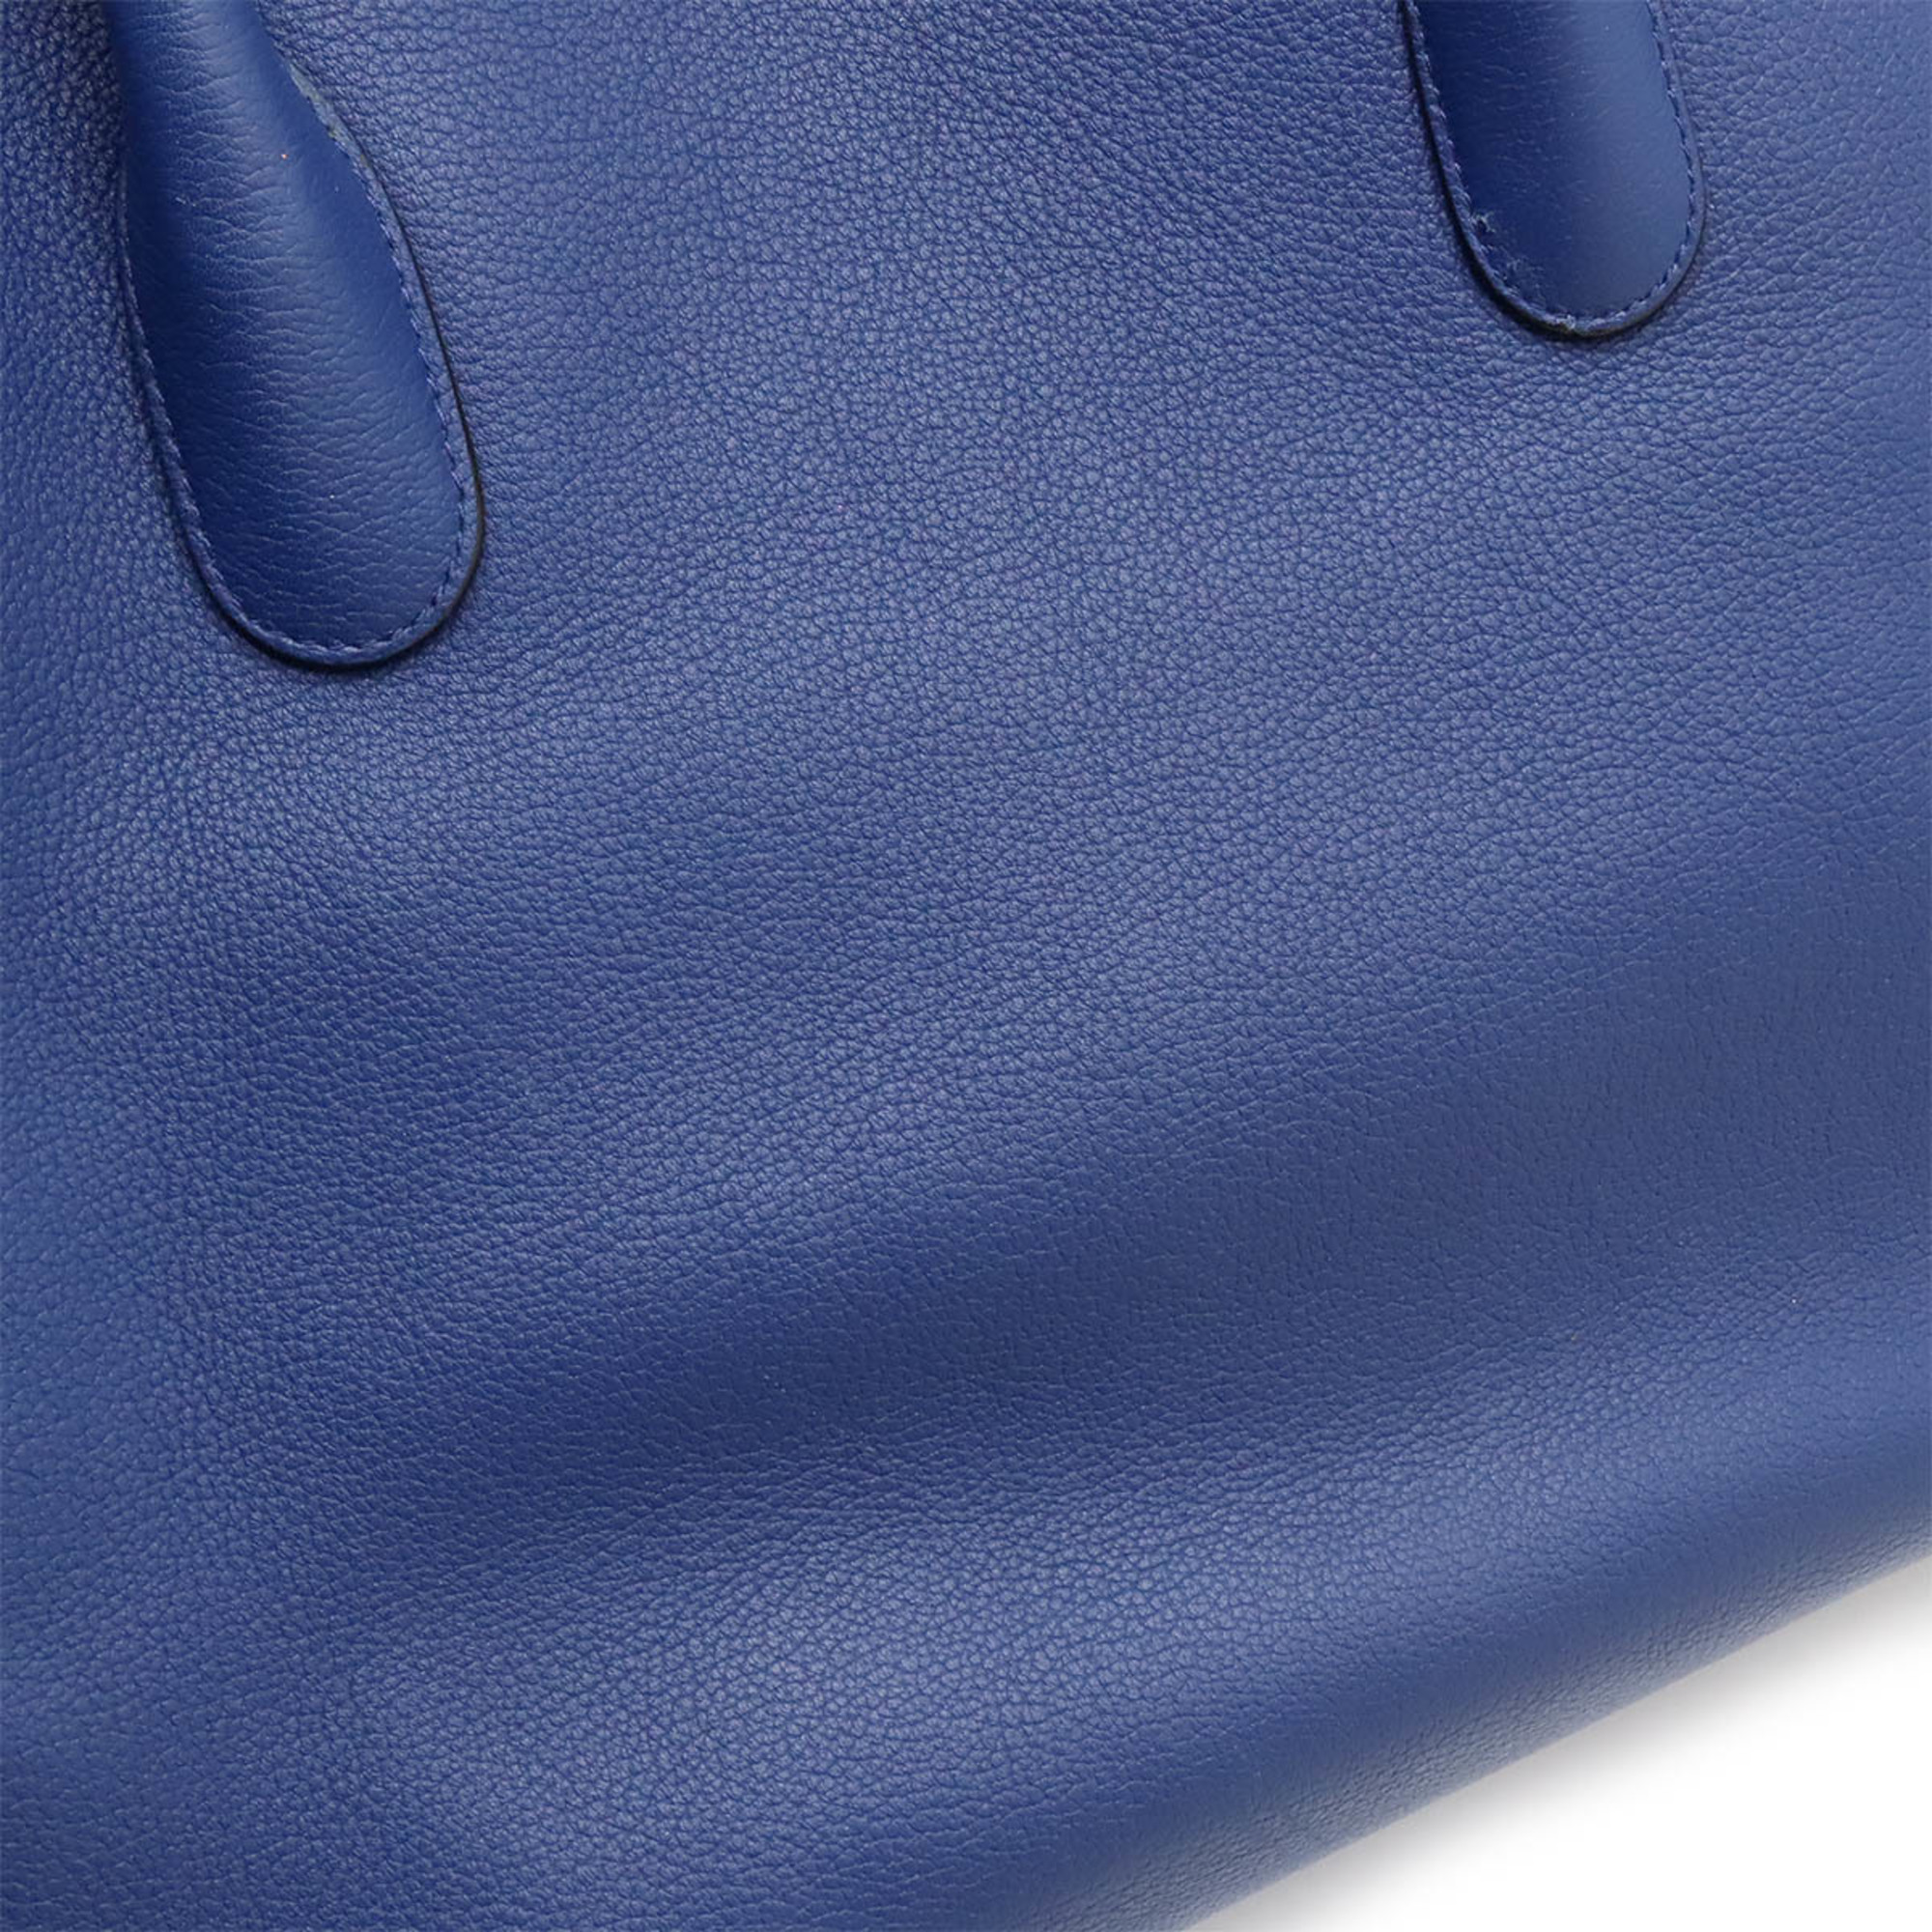 Christian Dior Bar Handbag Tote Bag Leather Blue